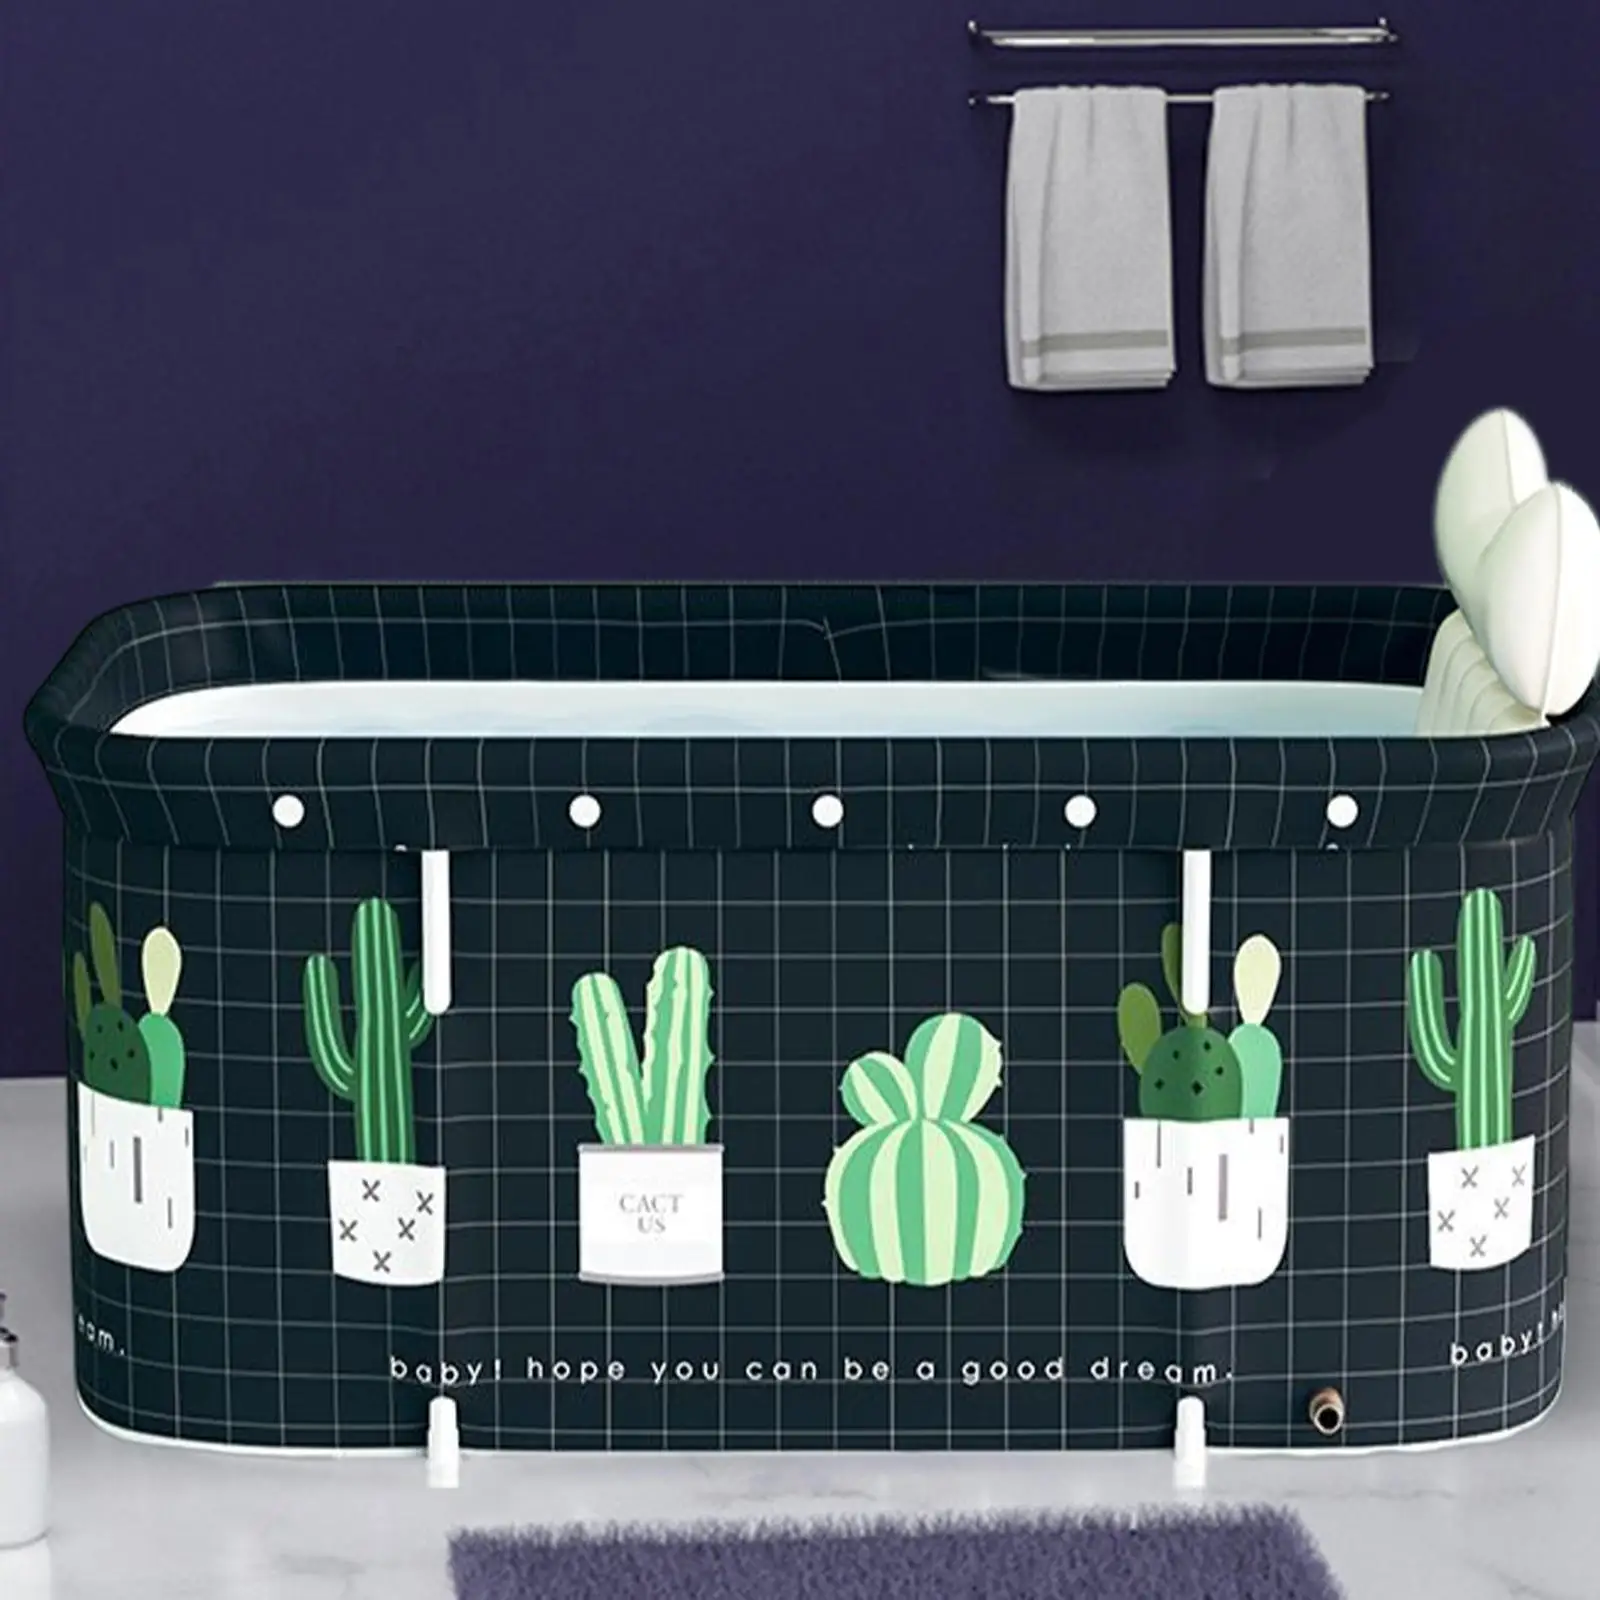 Portable Folding Bathtub Family Bathroom SPA Bathtub Measure 47x22x20inch for Kids Adults